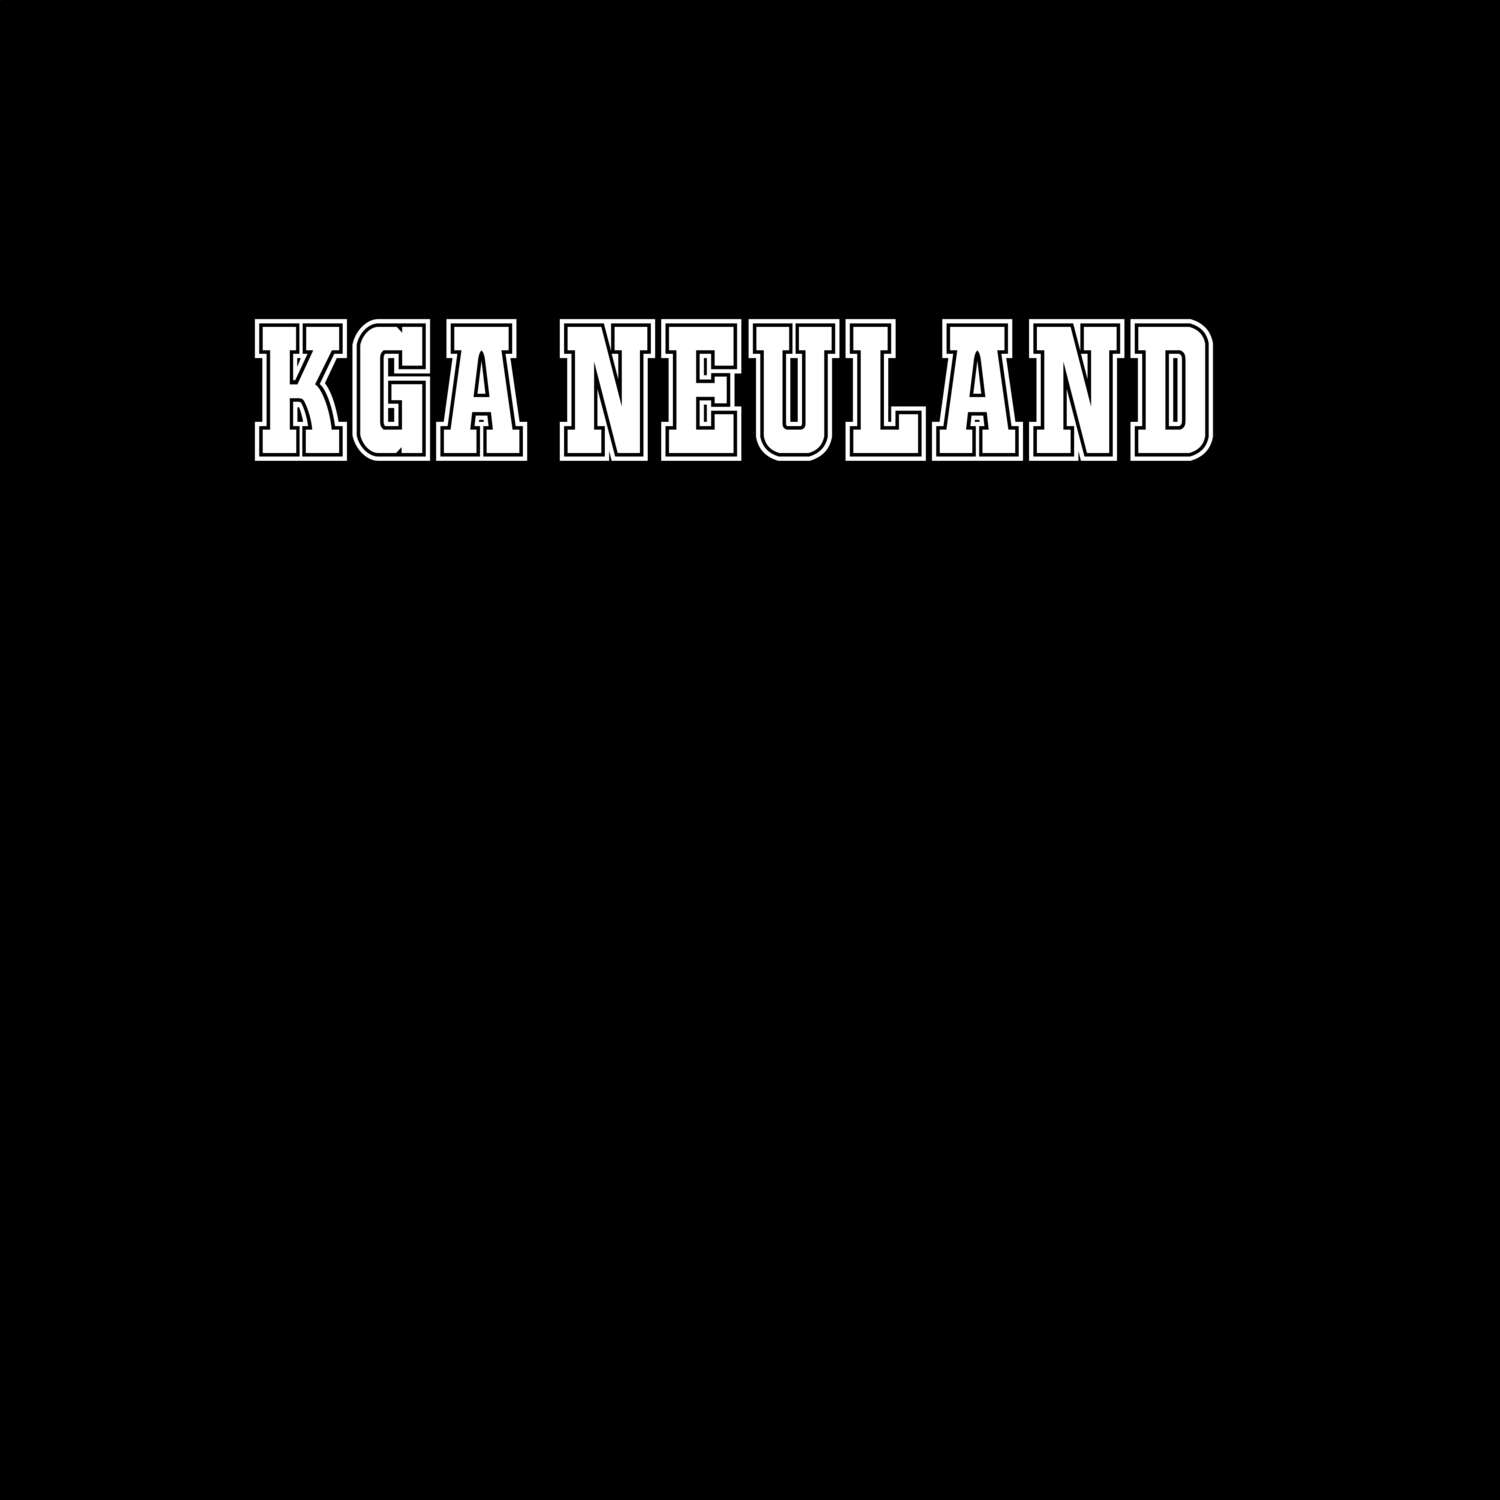 KGA Neuland T-Shirt »Classic«